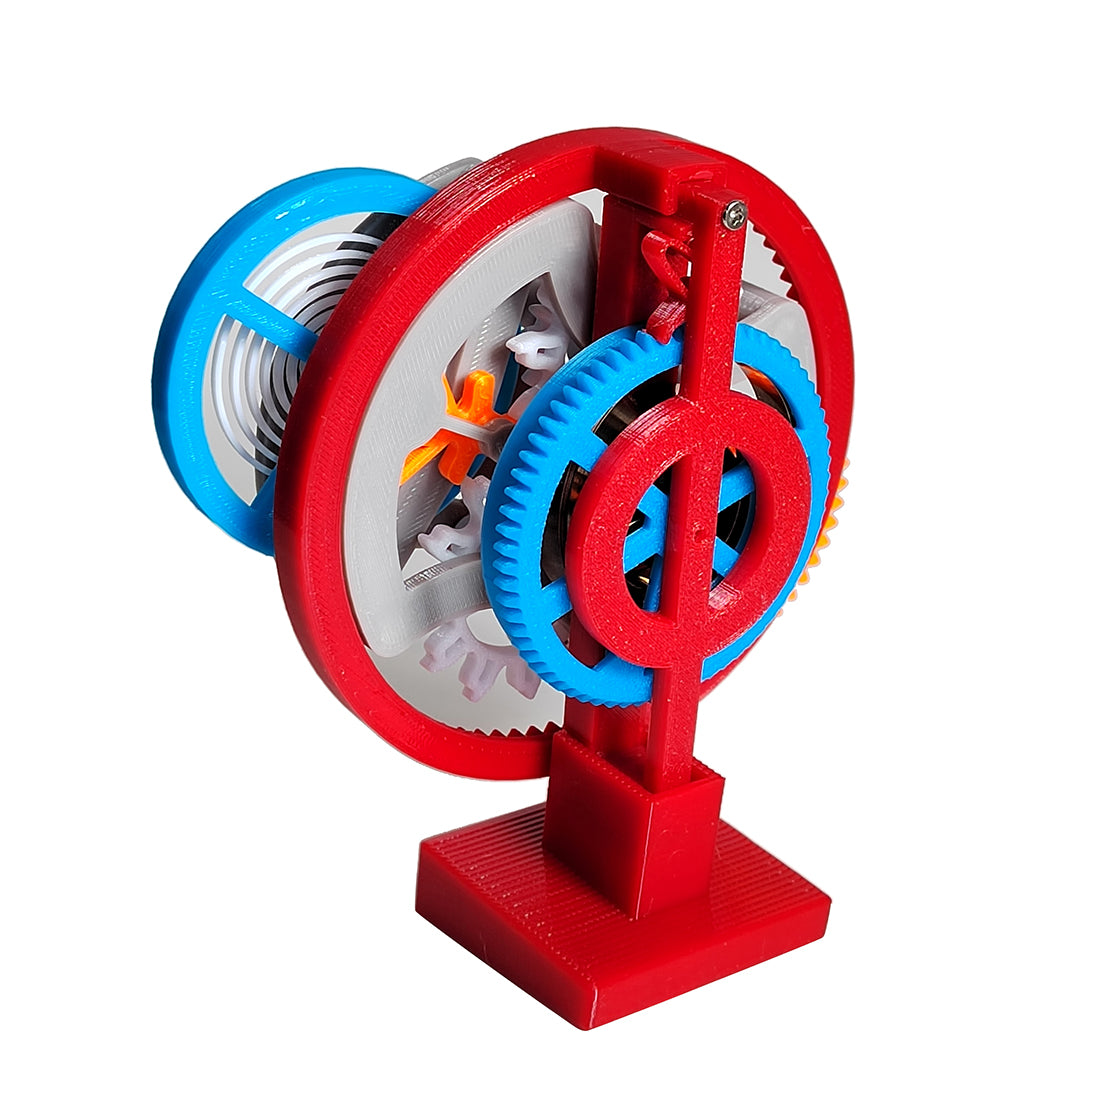 3D Printed Double-ring Flywheel Tourbillon Assembly Model